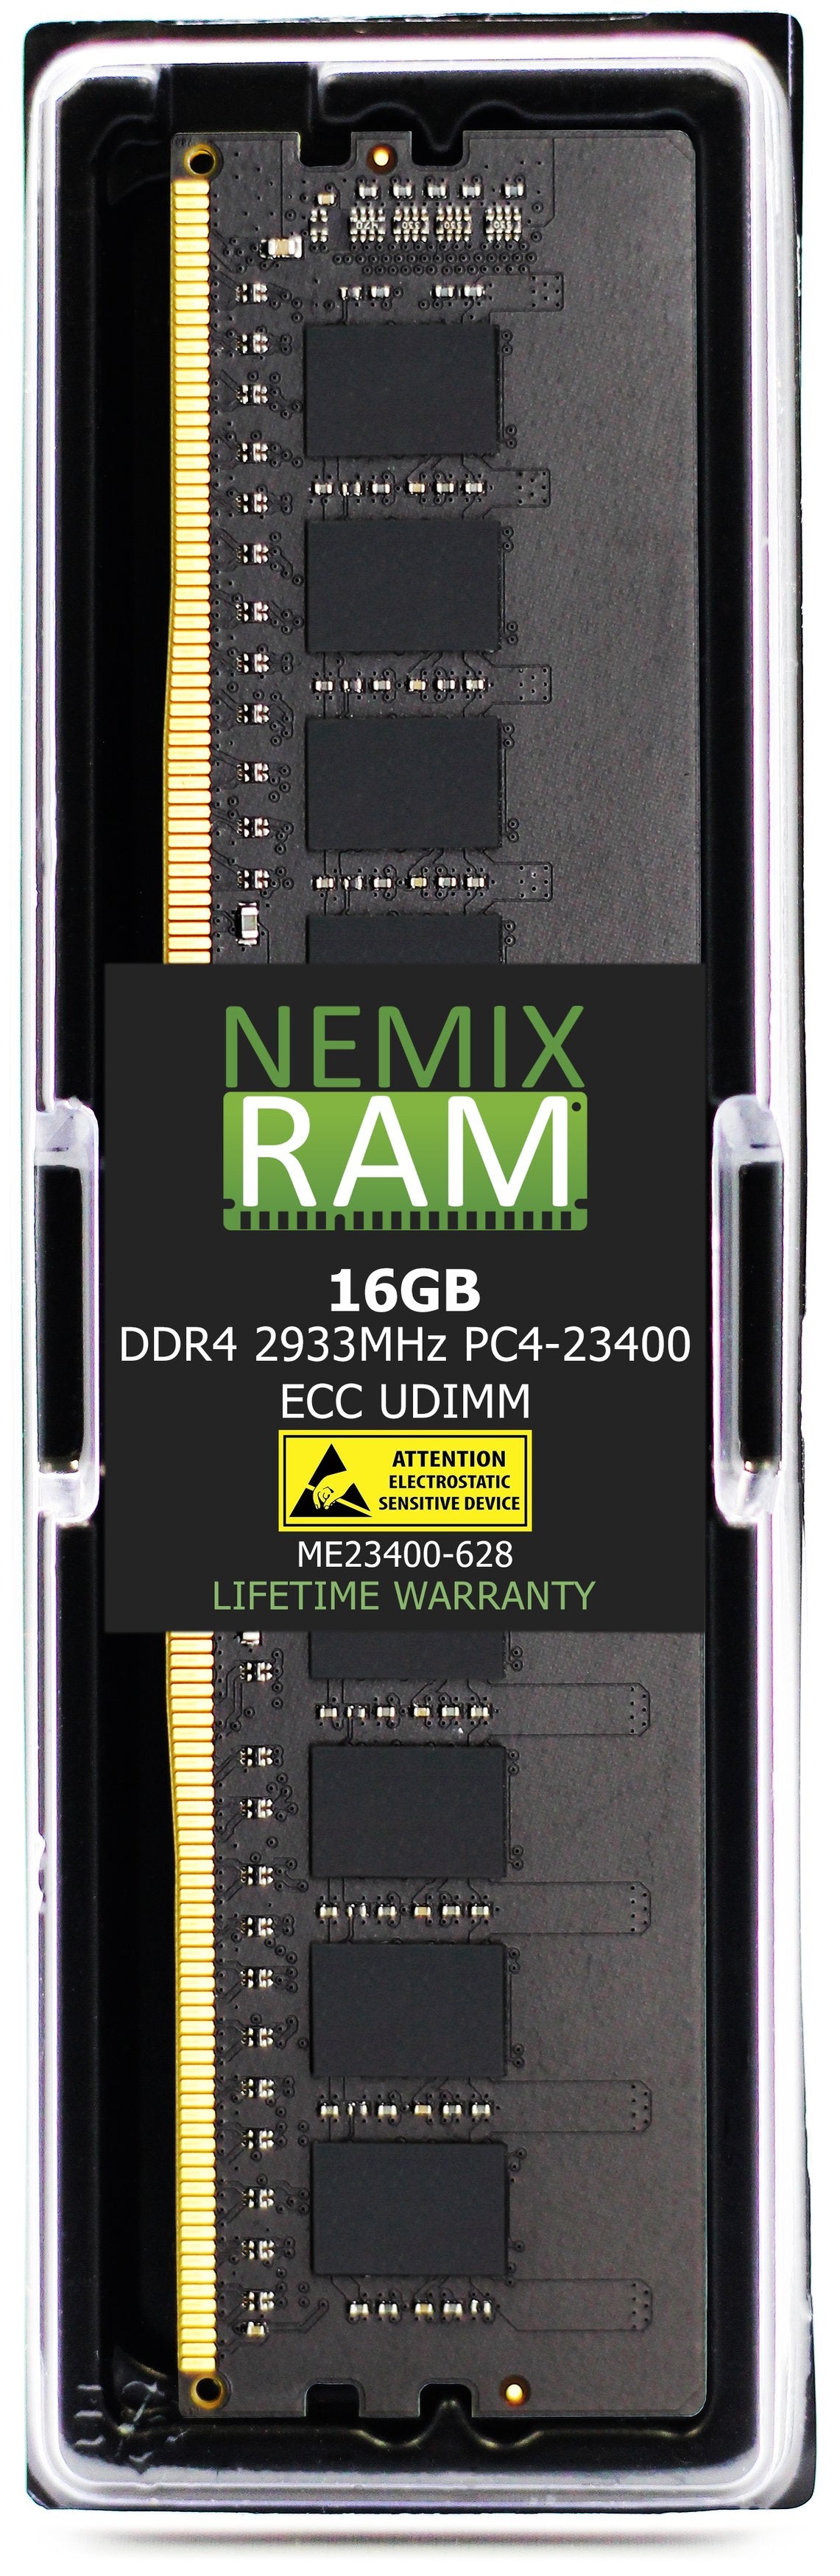 16GB DDR4 2933MHZ PC4-23400 ECC UDIMM Compatible with Supermicro MEM-DR416LD-EU29